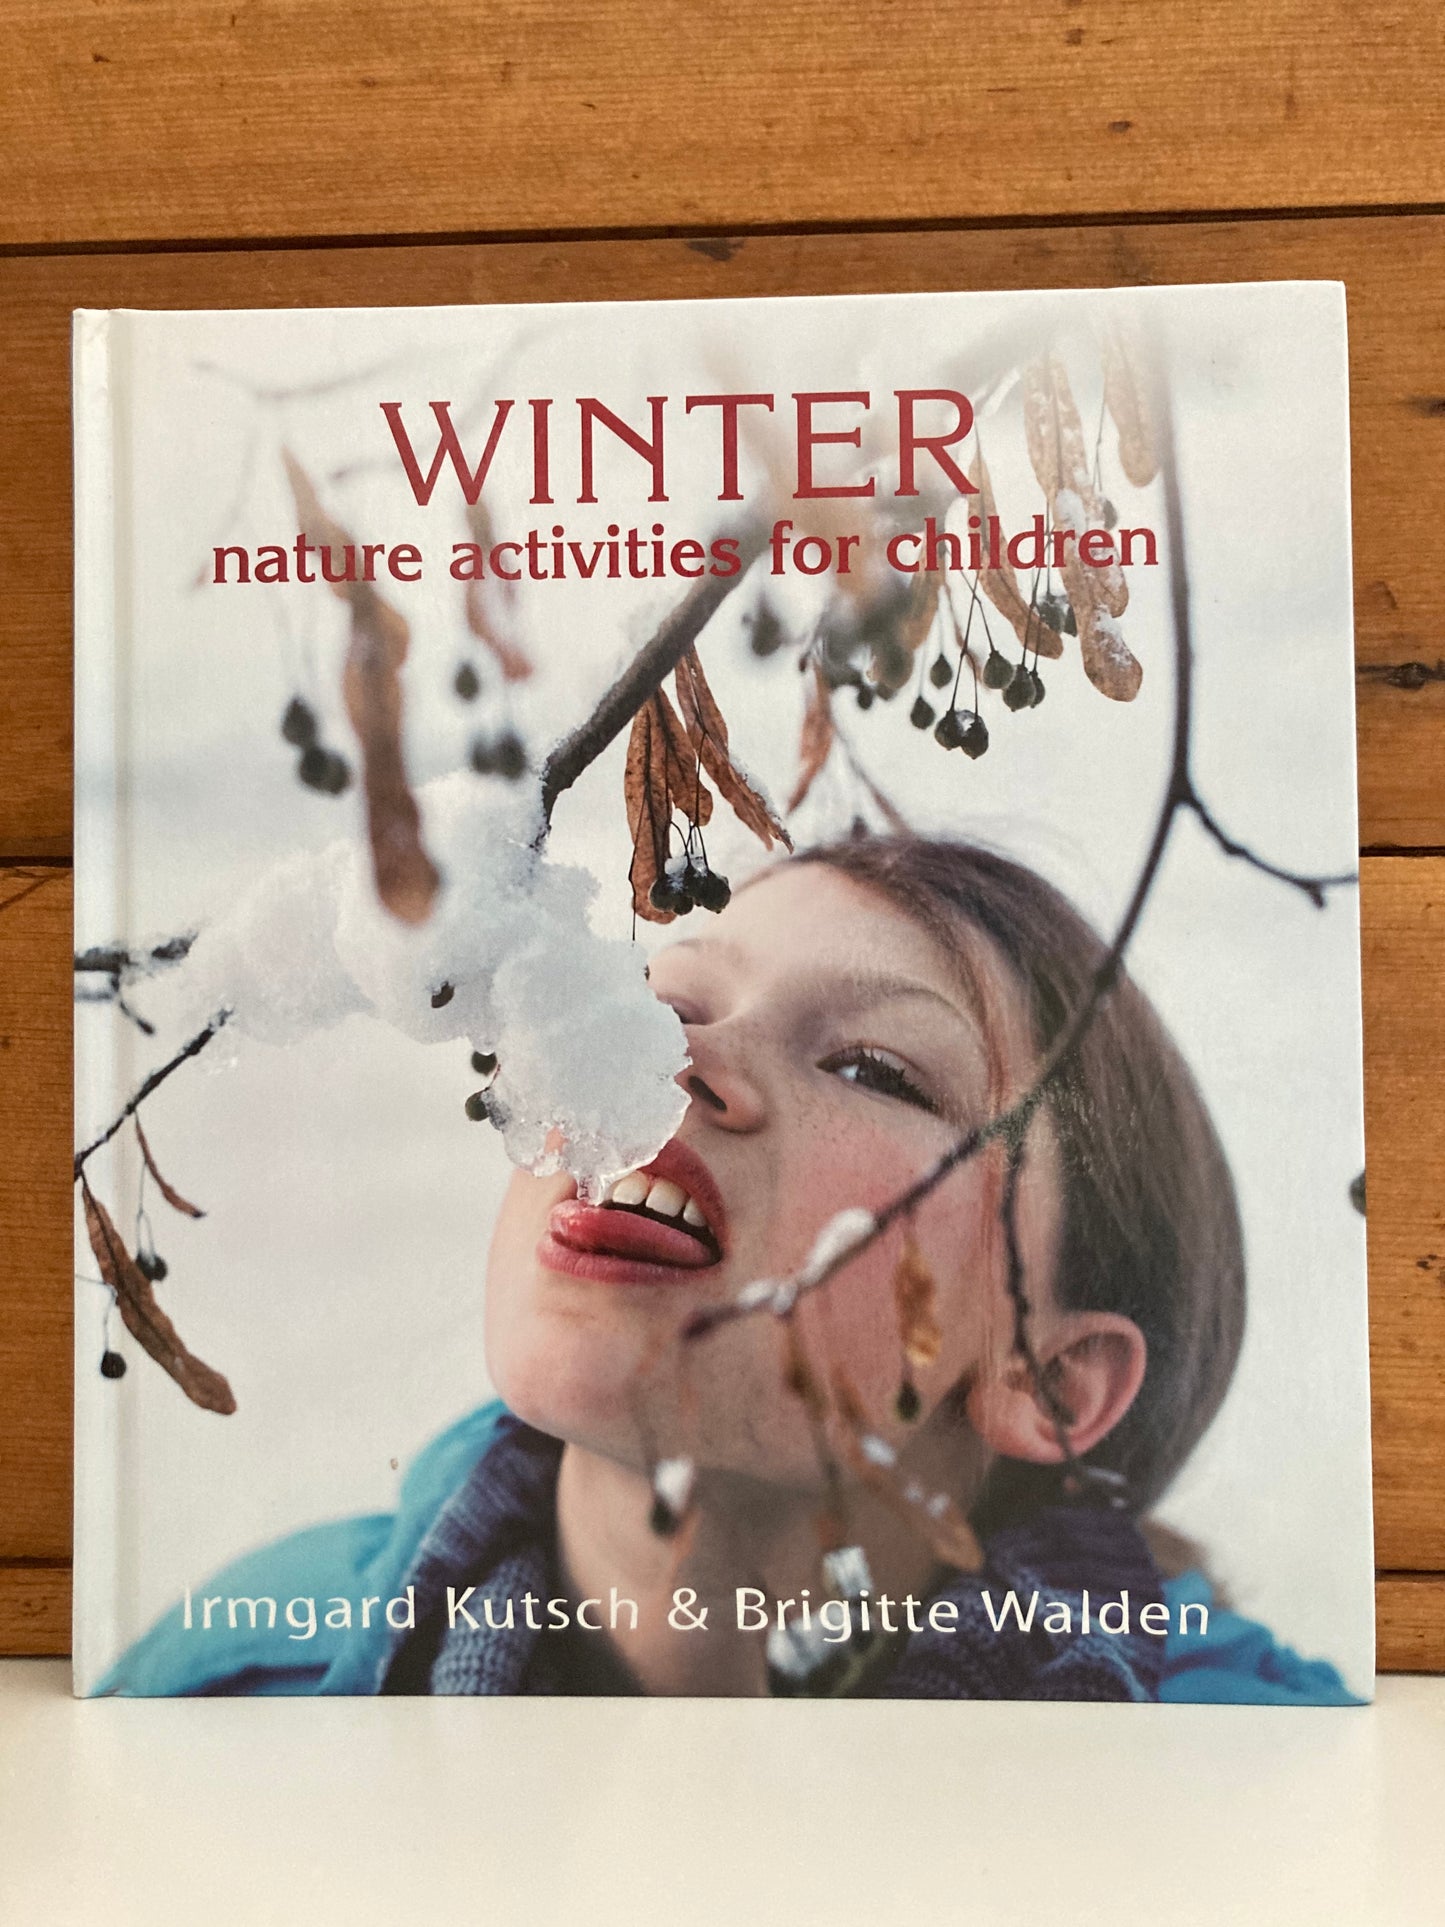 Parenting Resource Book - AUTUMN AND WINTER NATURE ACTIVITIES